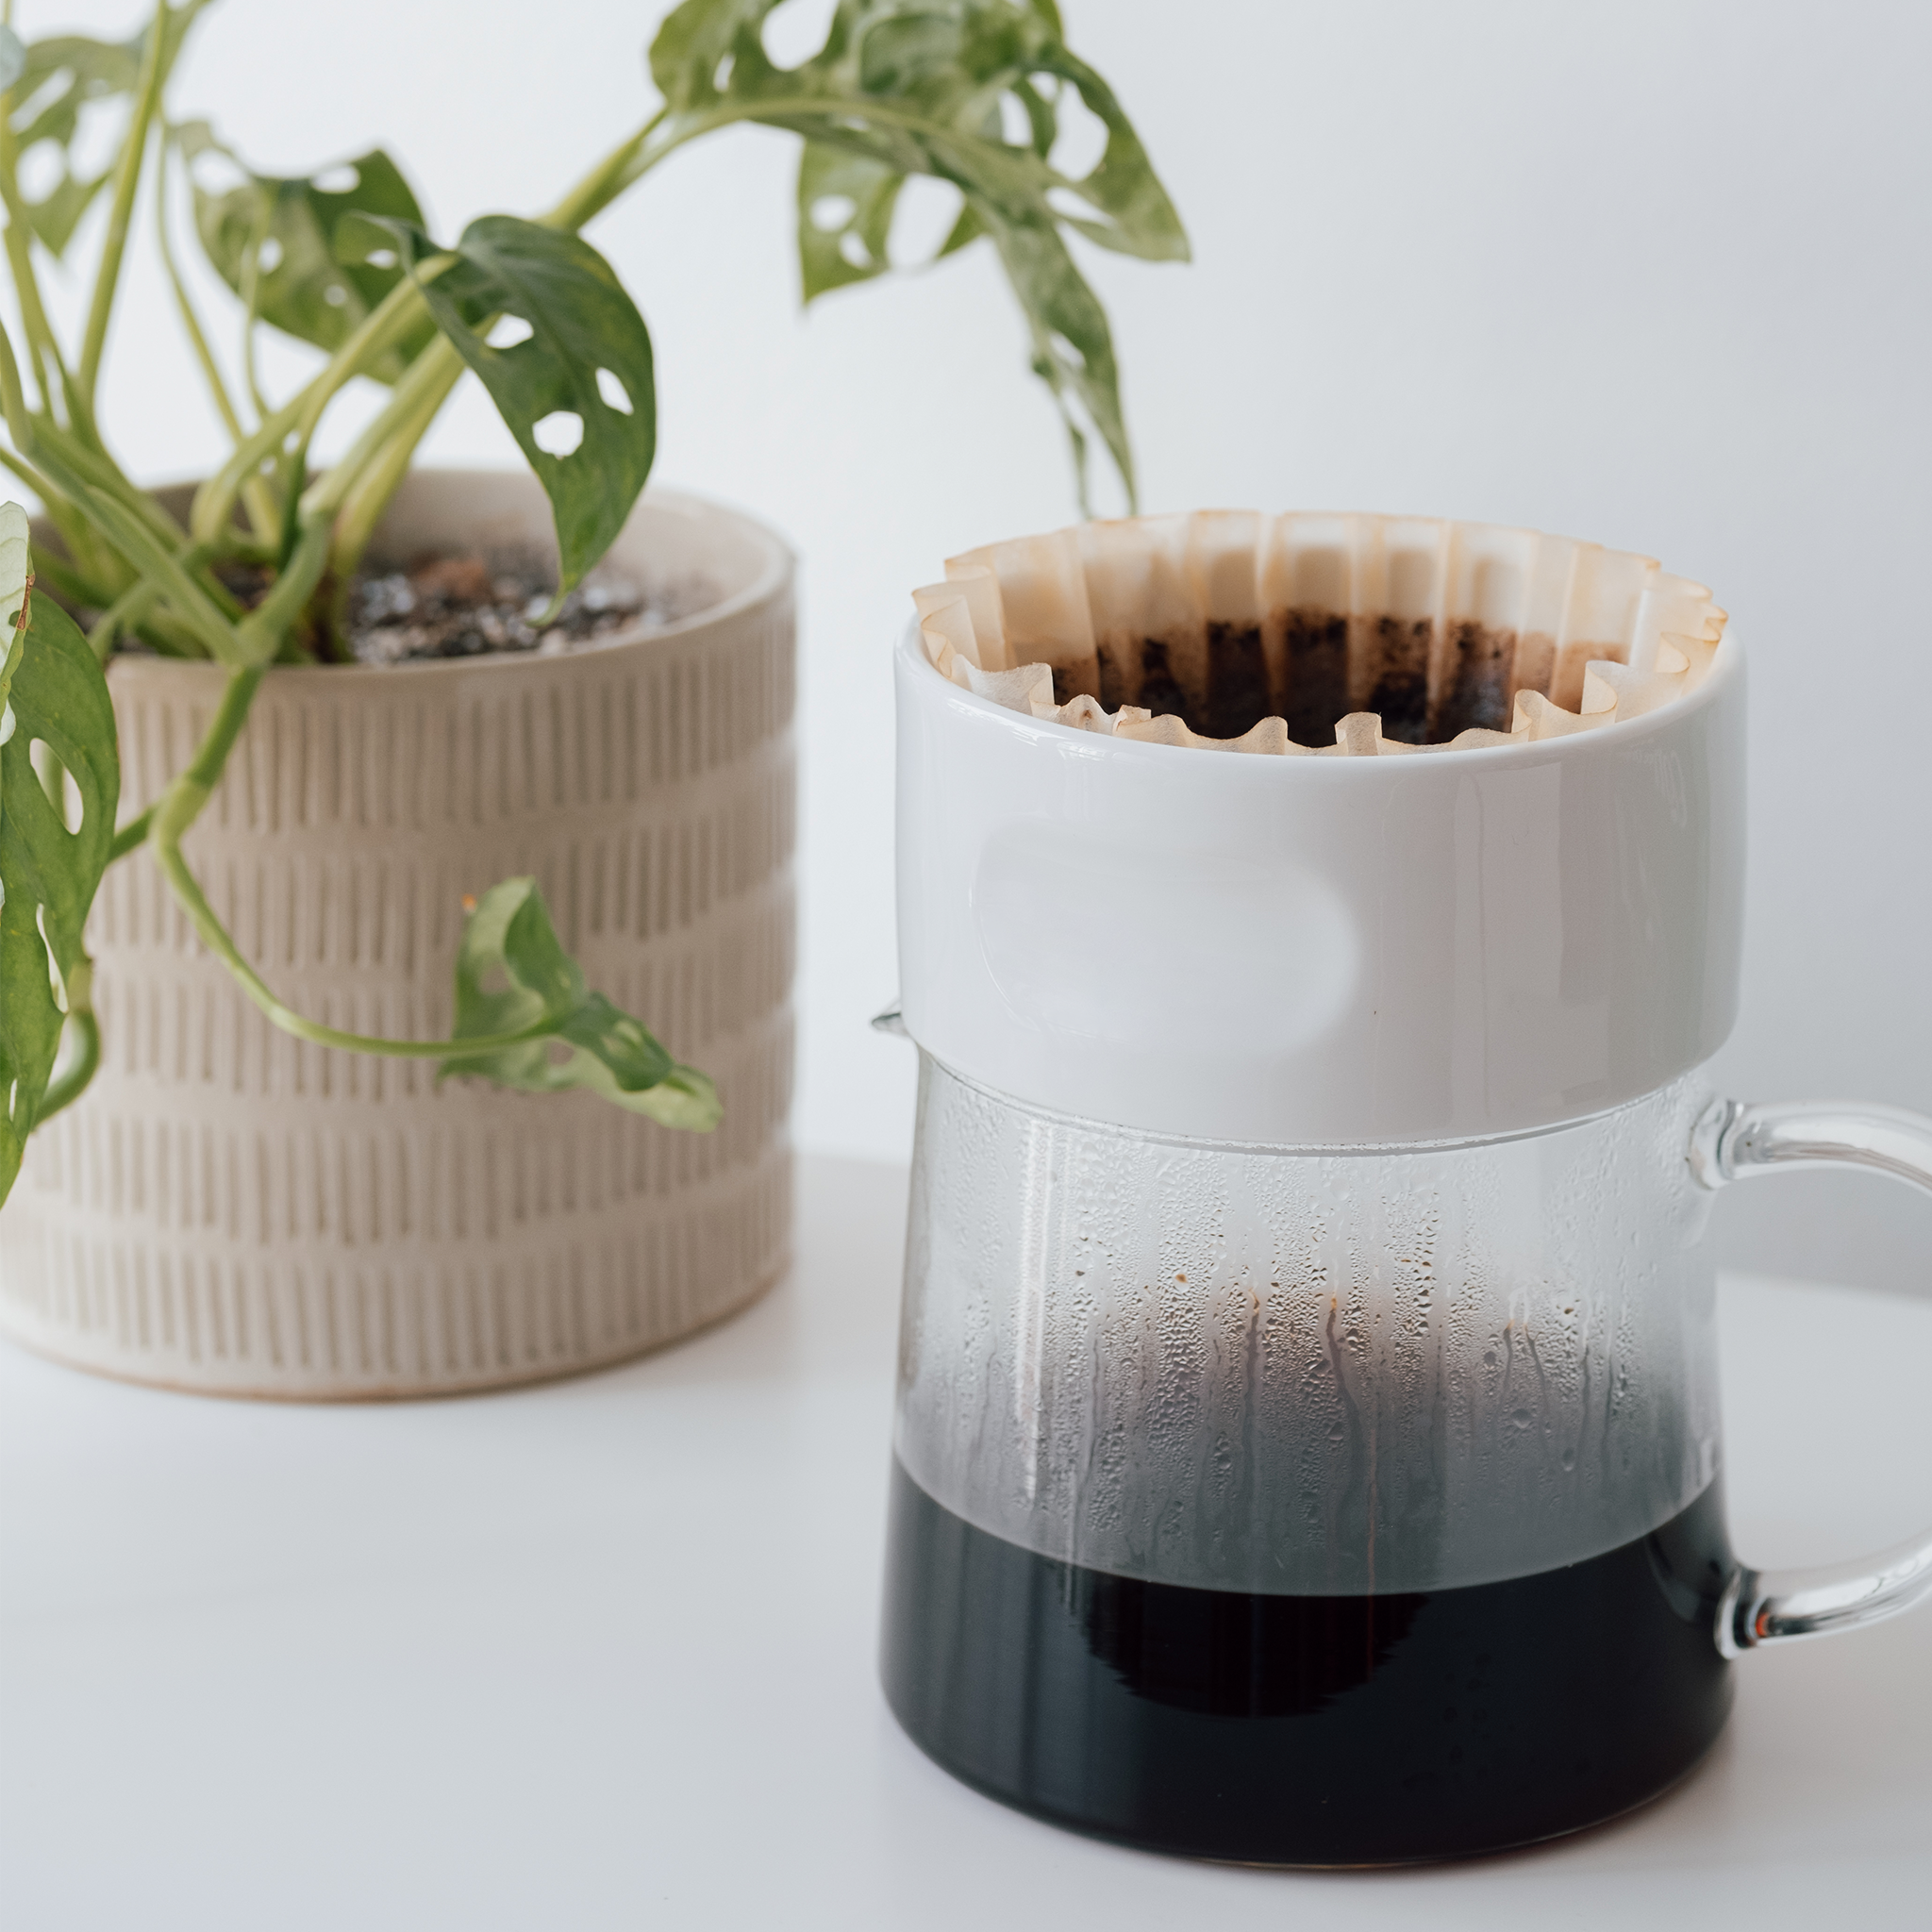 Etkin 8-Cup Coffee Dripper